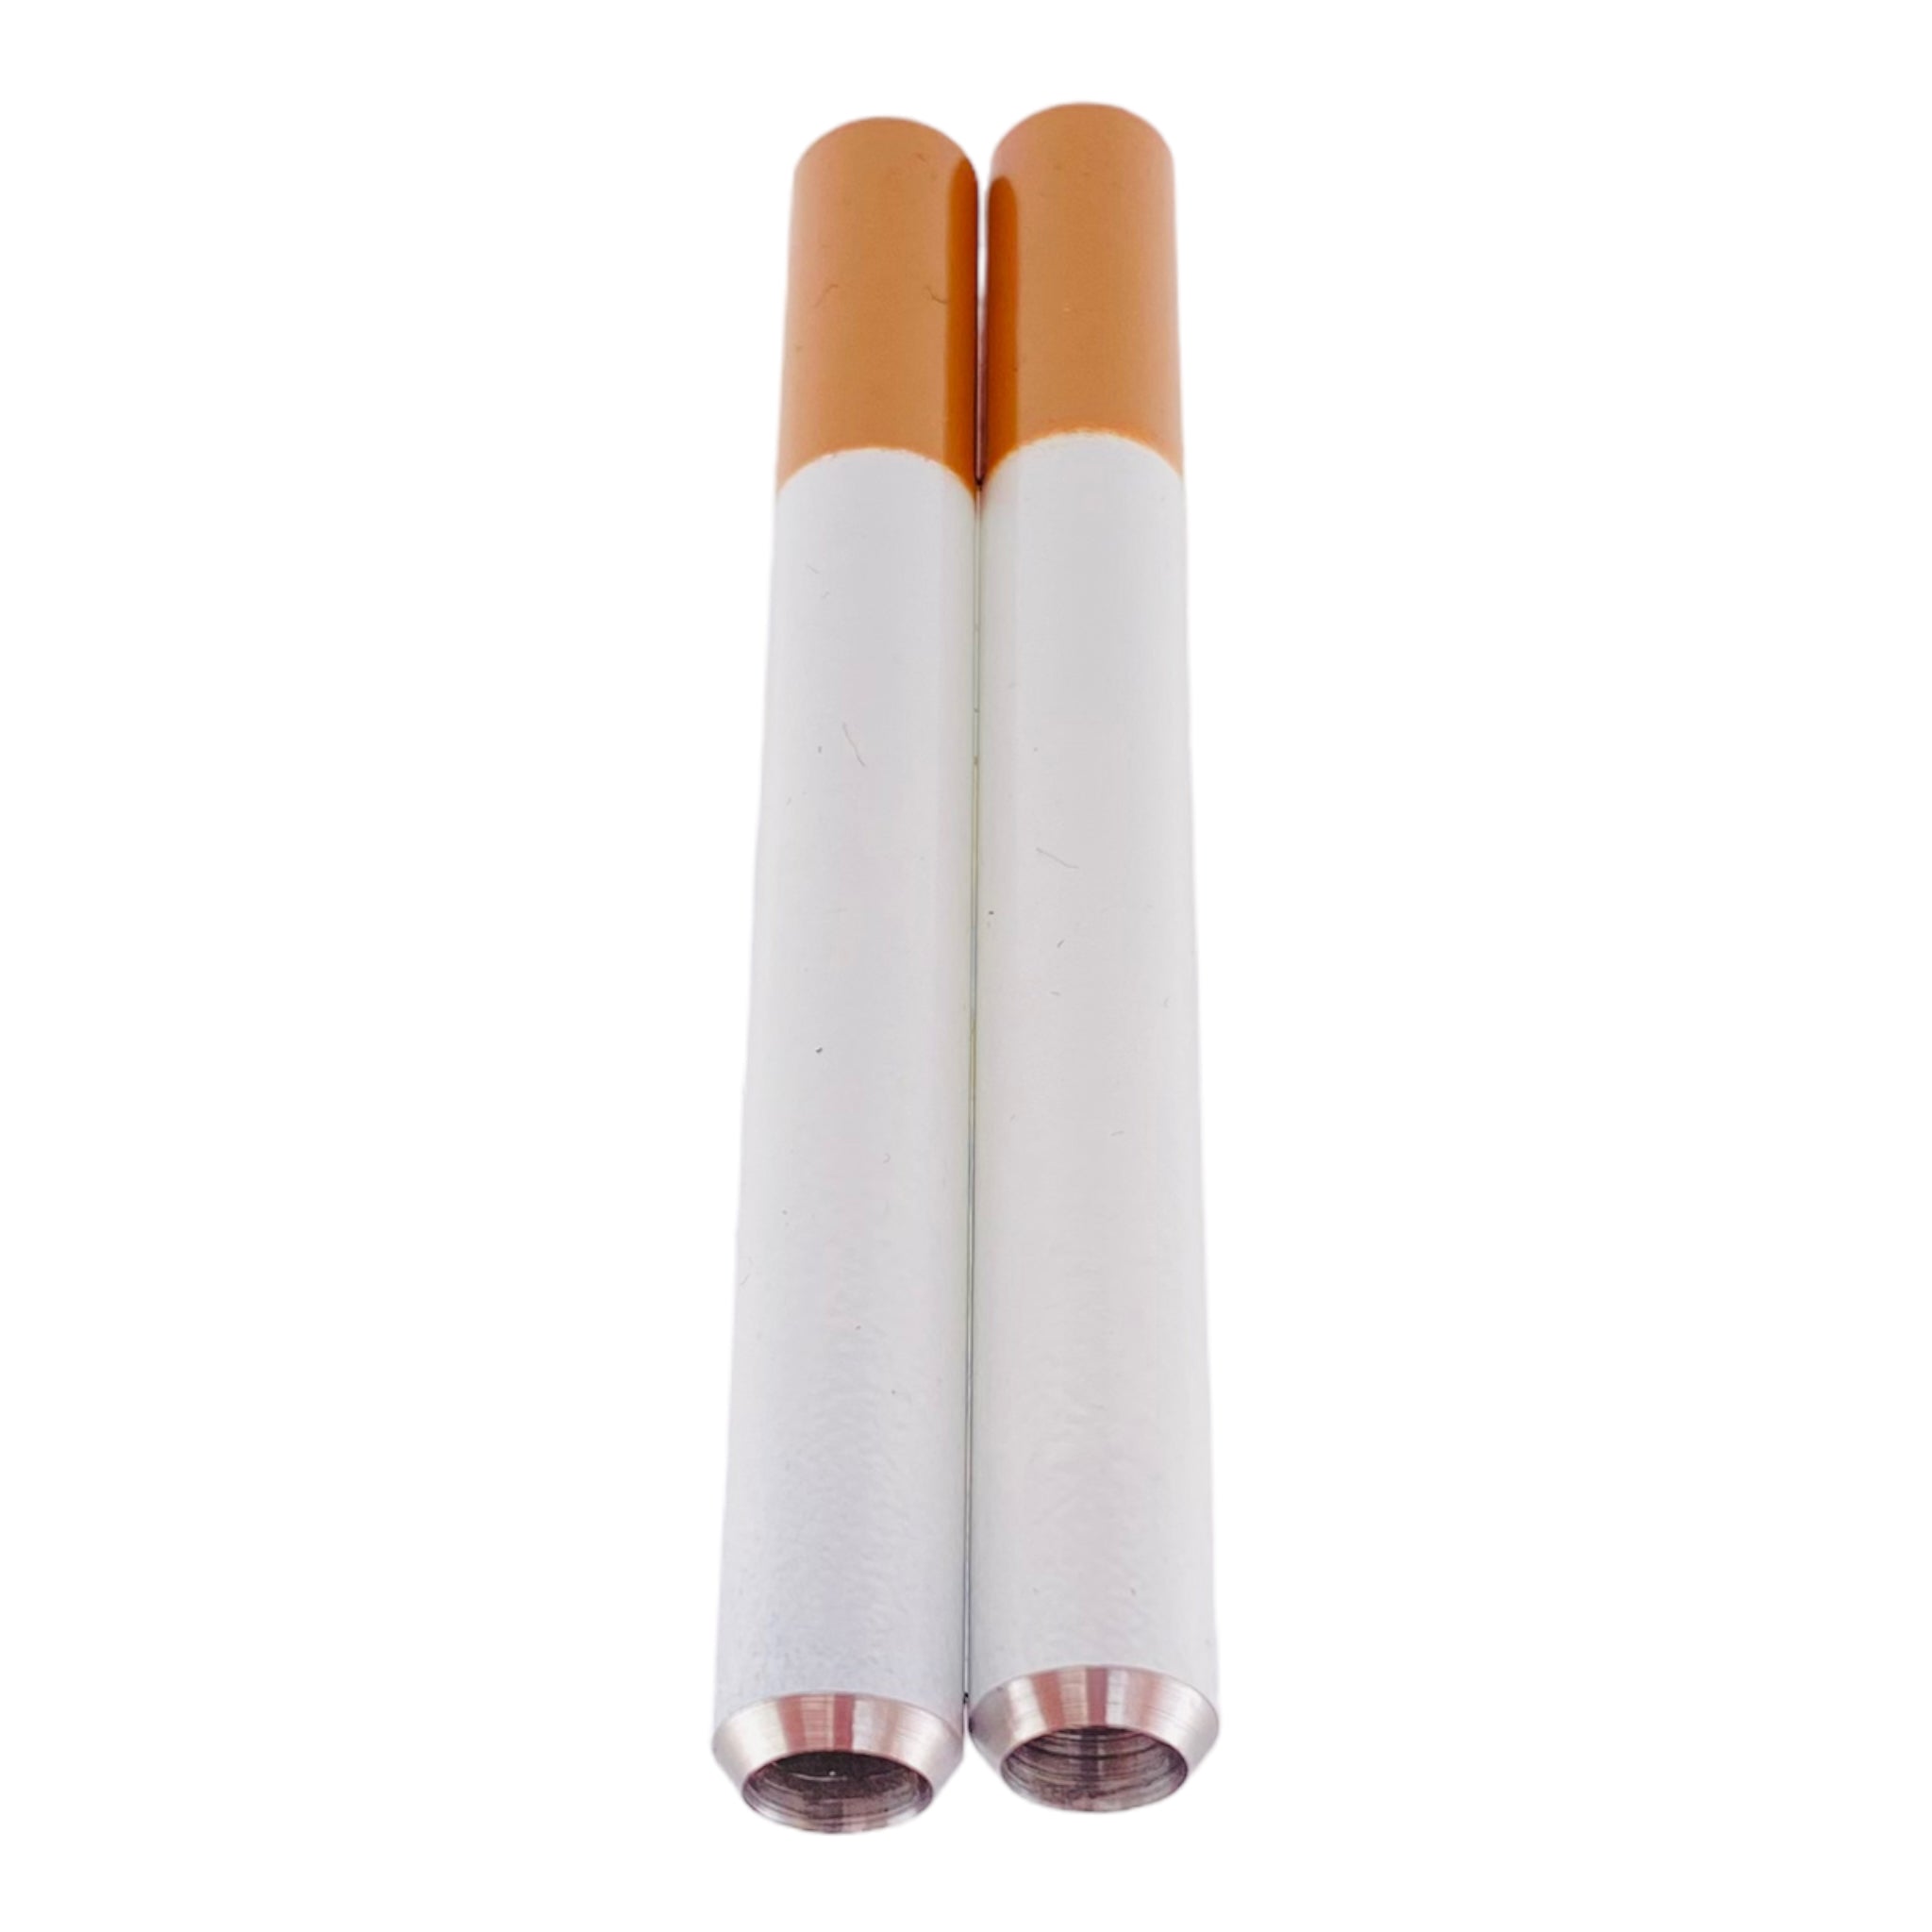 Large Metal Cigarette One Hitter Chillum - 2ct